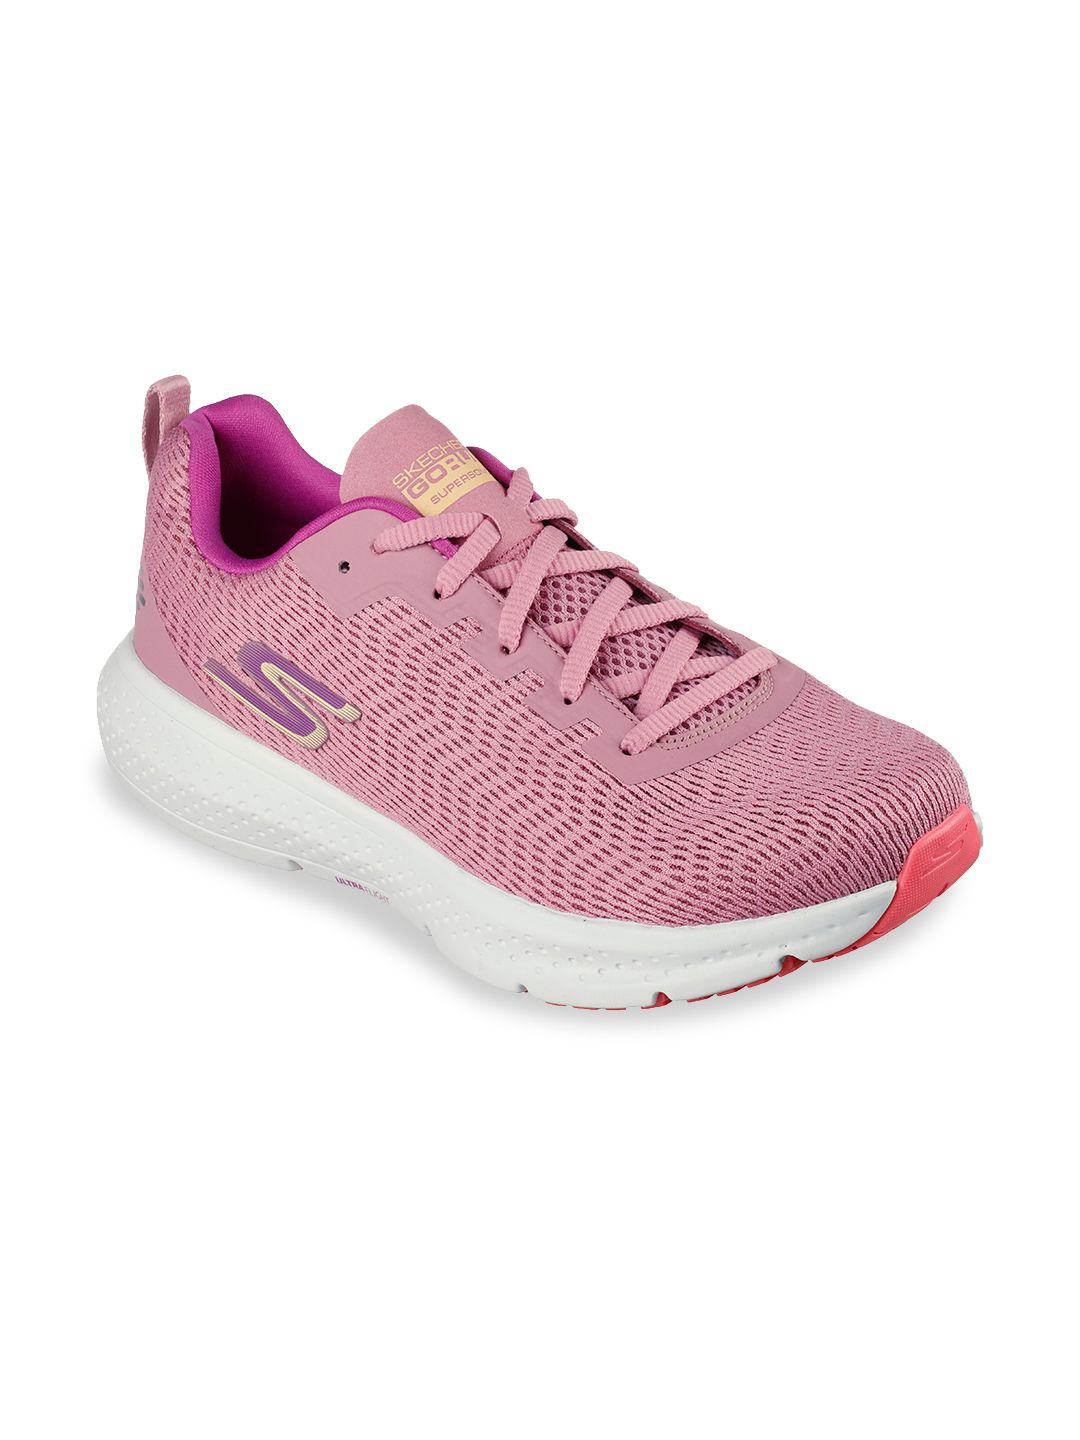 Skechers Women Pink Mesh GO RUN SUPERSONIC Running Non-Marking Shoes Price in India